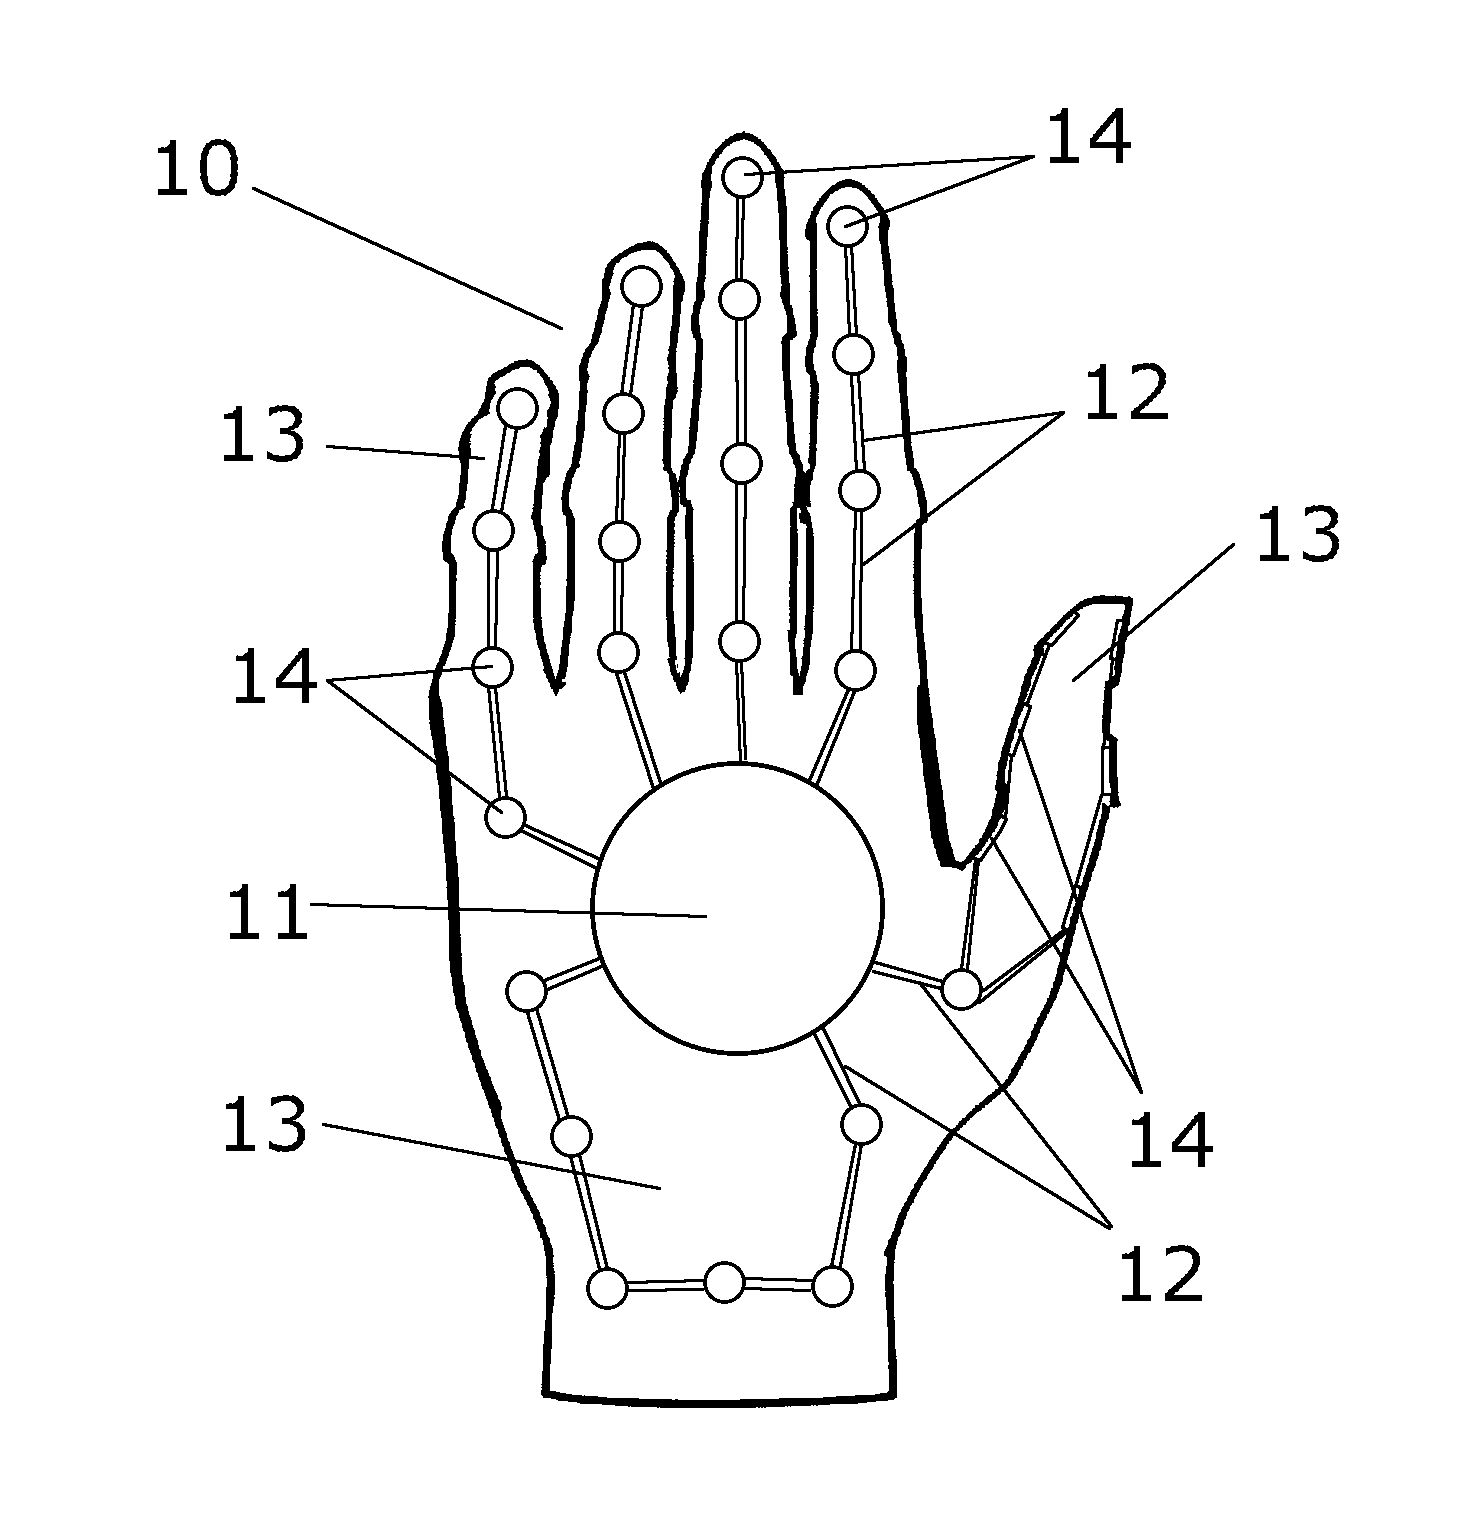 Medical Glove for Electric Stimulation